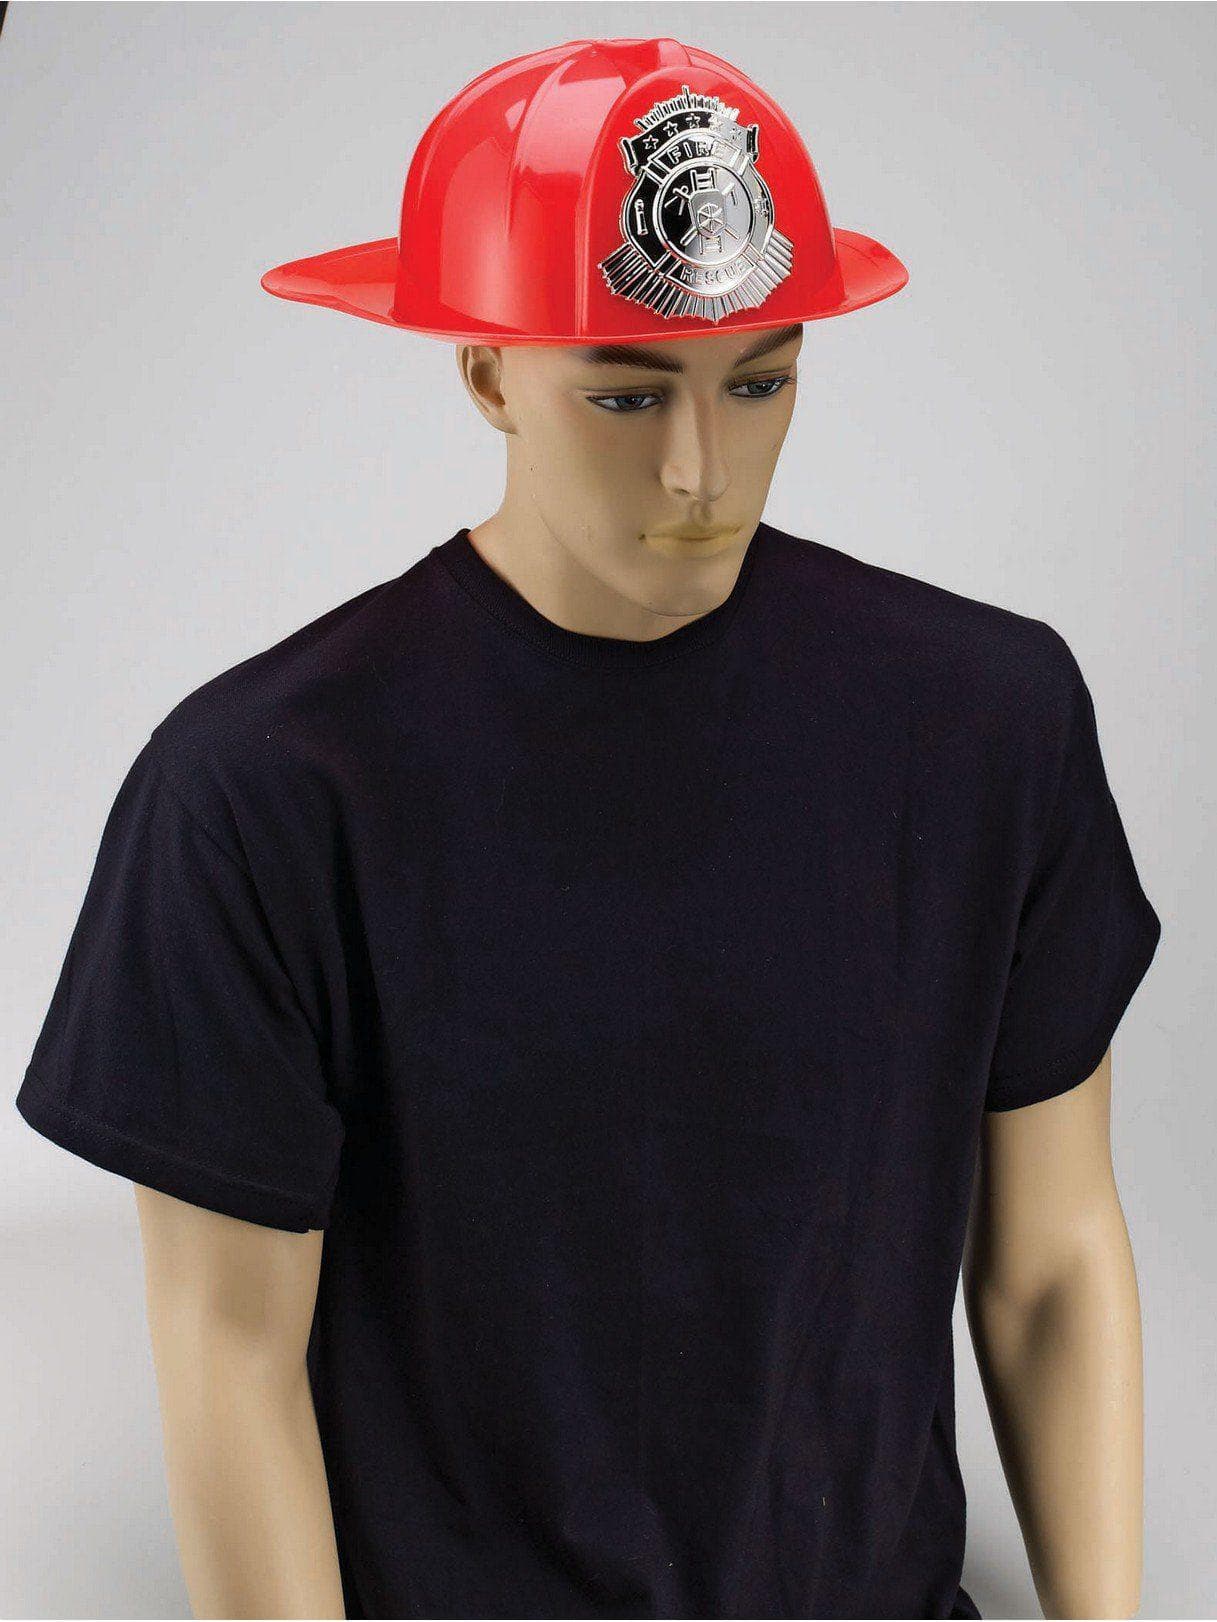 Adult Red Fireman Helmet - costumes.com